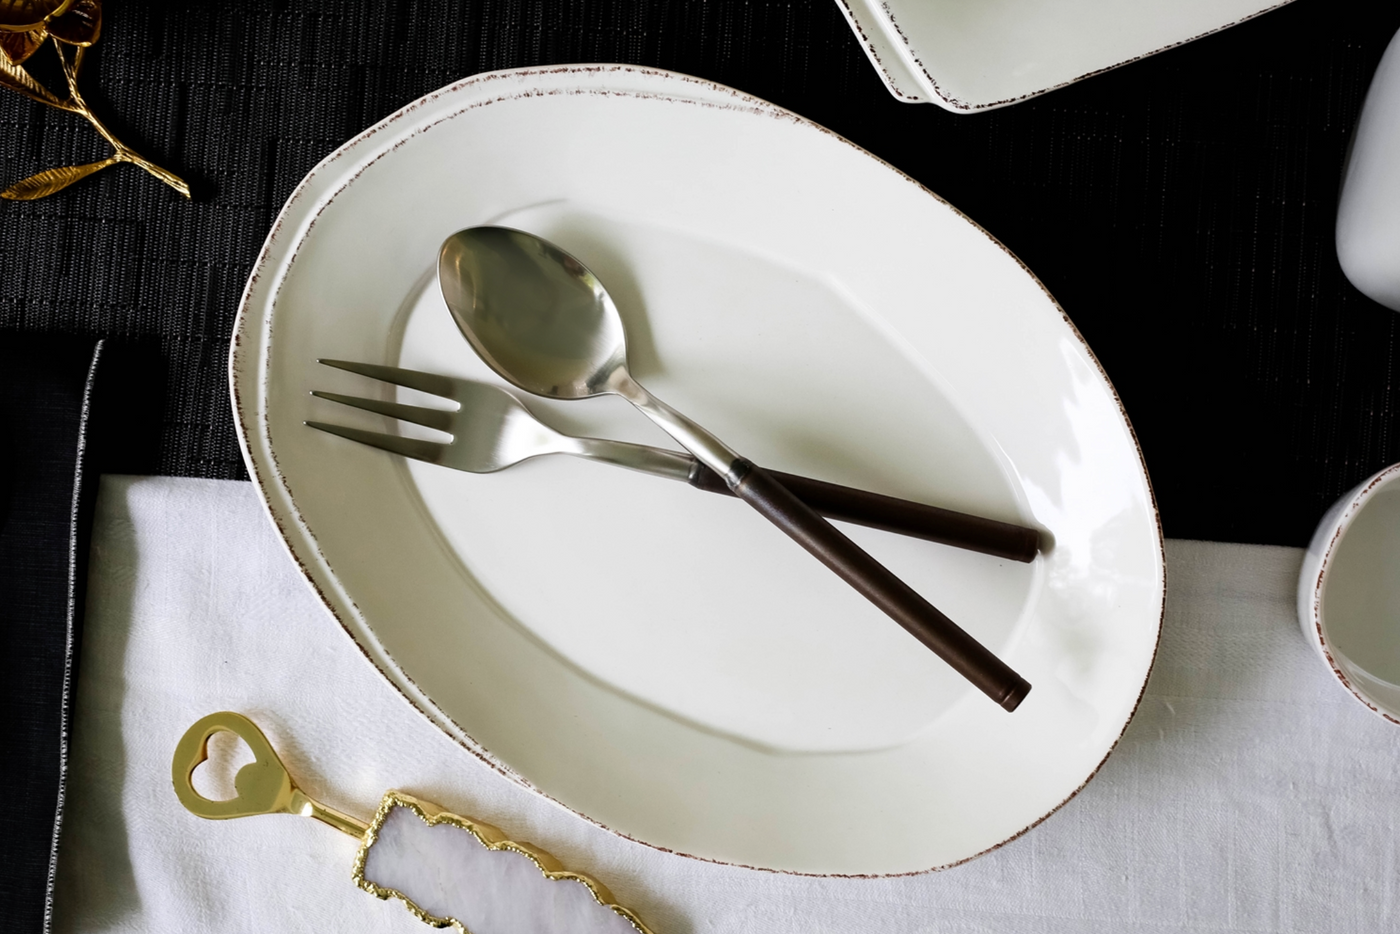 Melamine Lastra White Oval Platter , Vietri, Platters + Boards- Julia Moss Designs